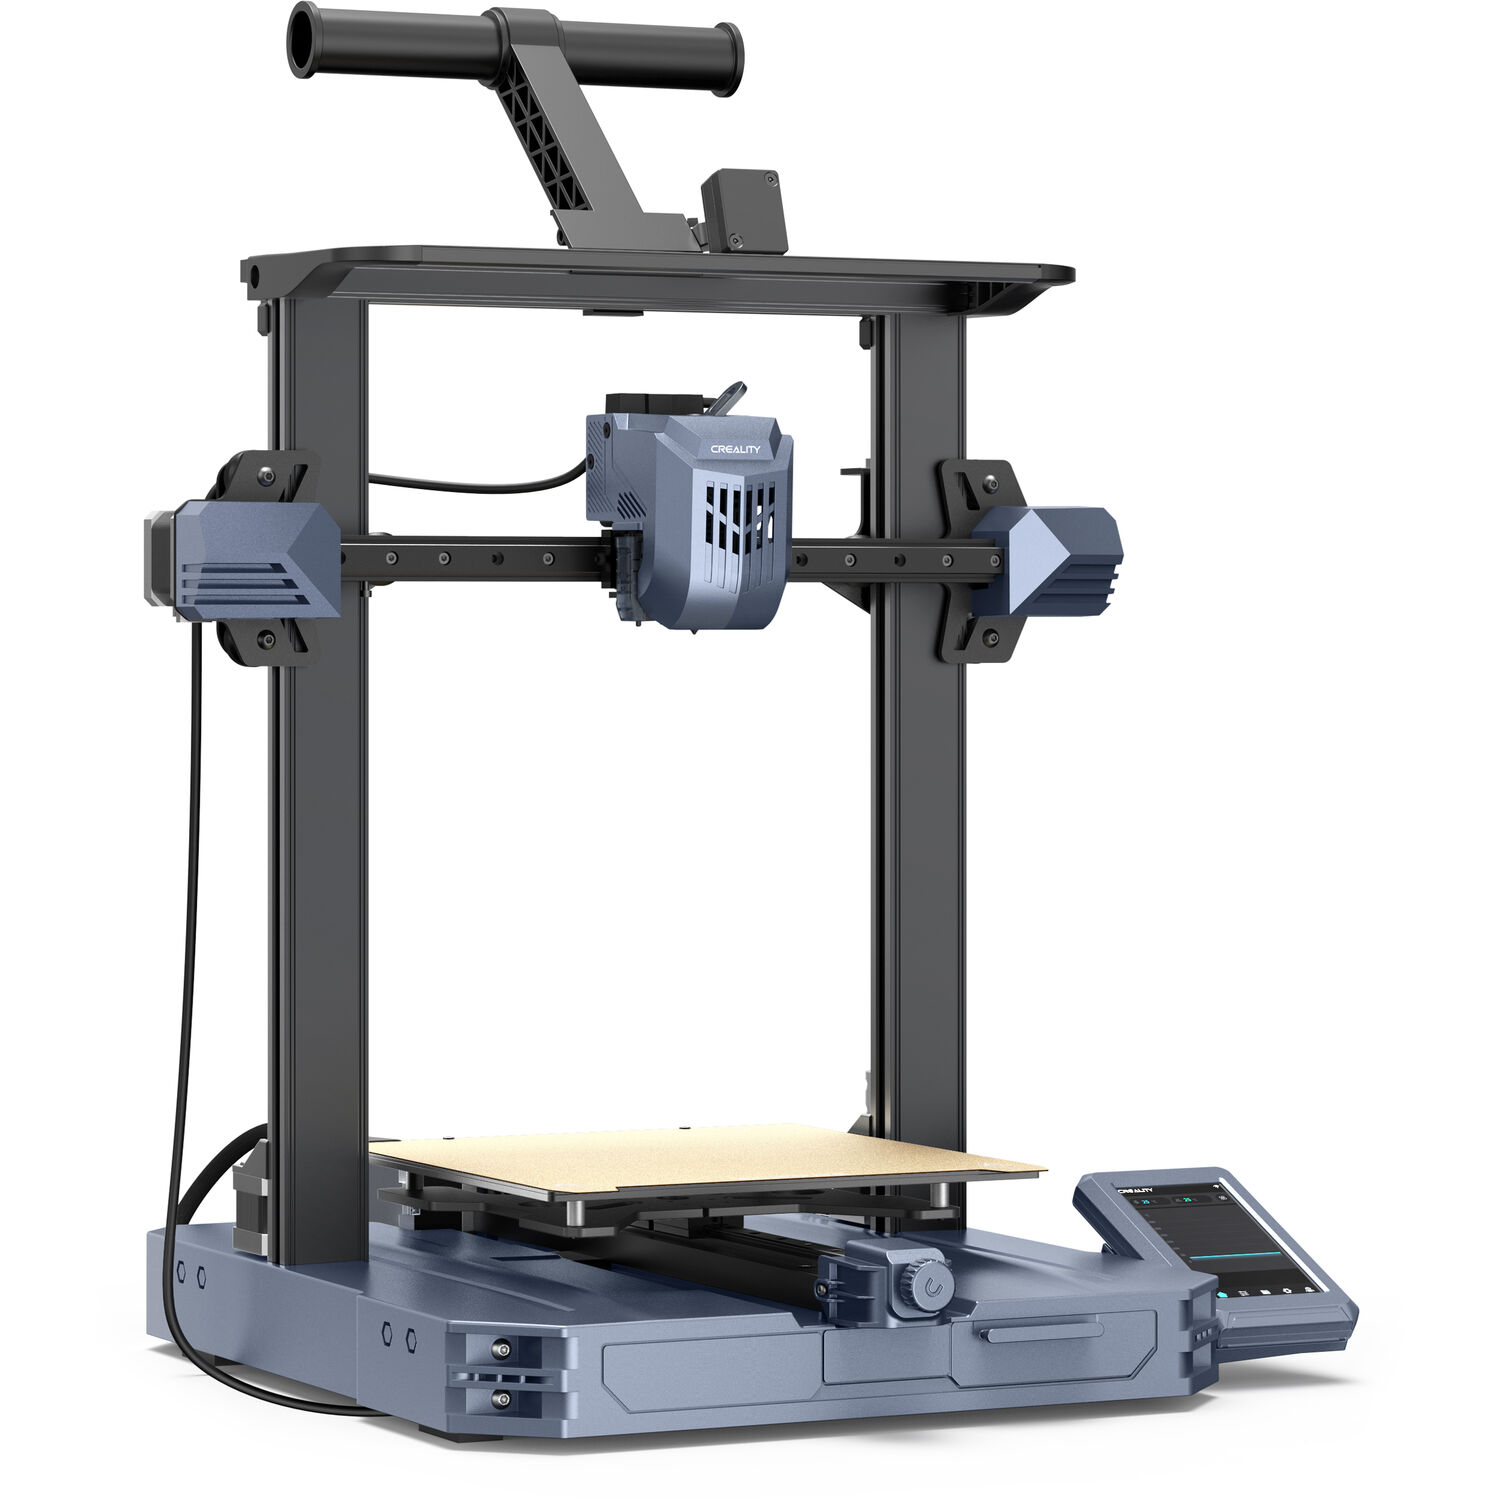 Creality CR-10 SE 3D Printer - $279 Free Shipping B&H photo